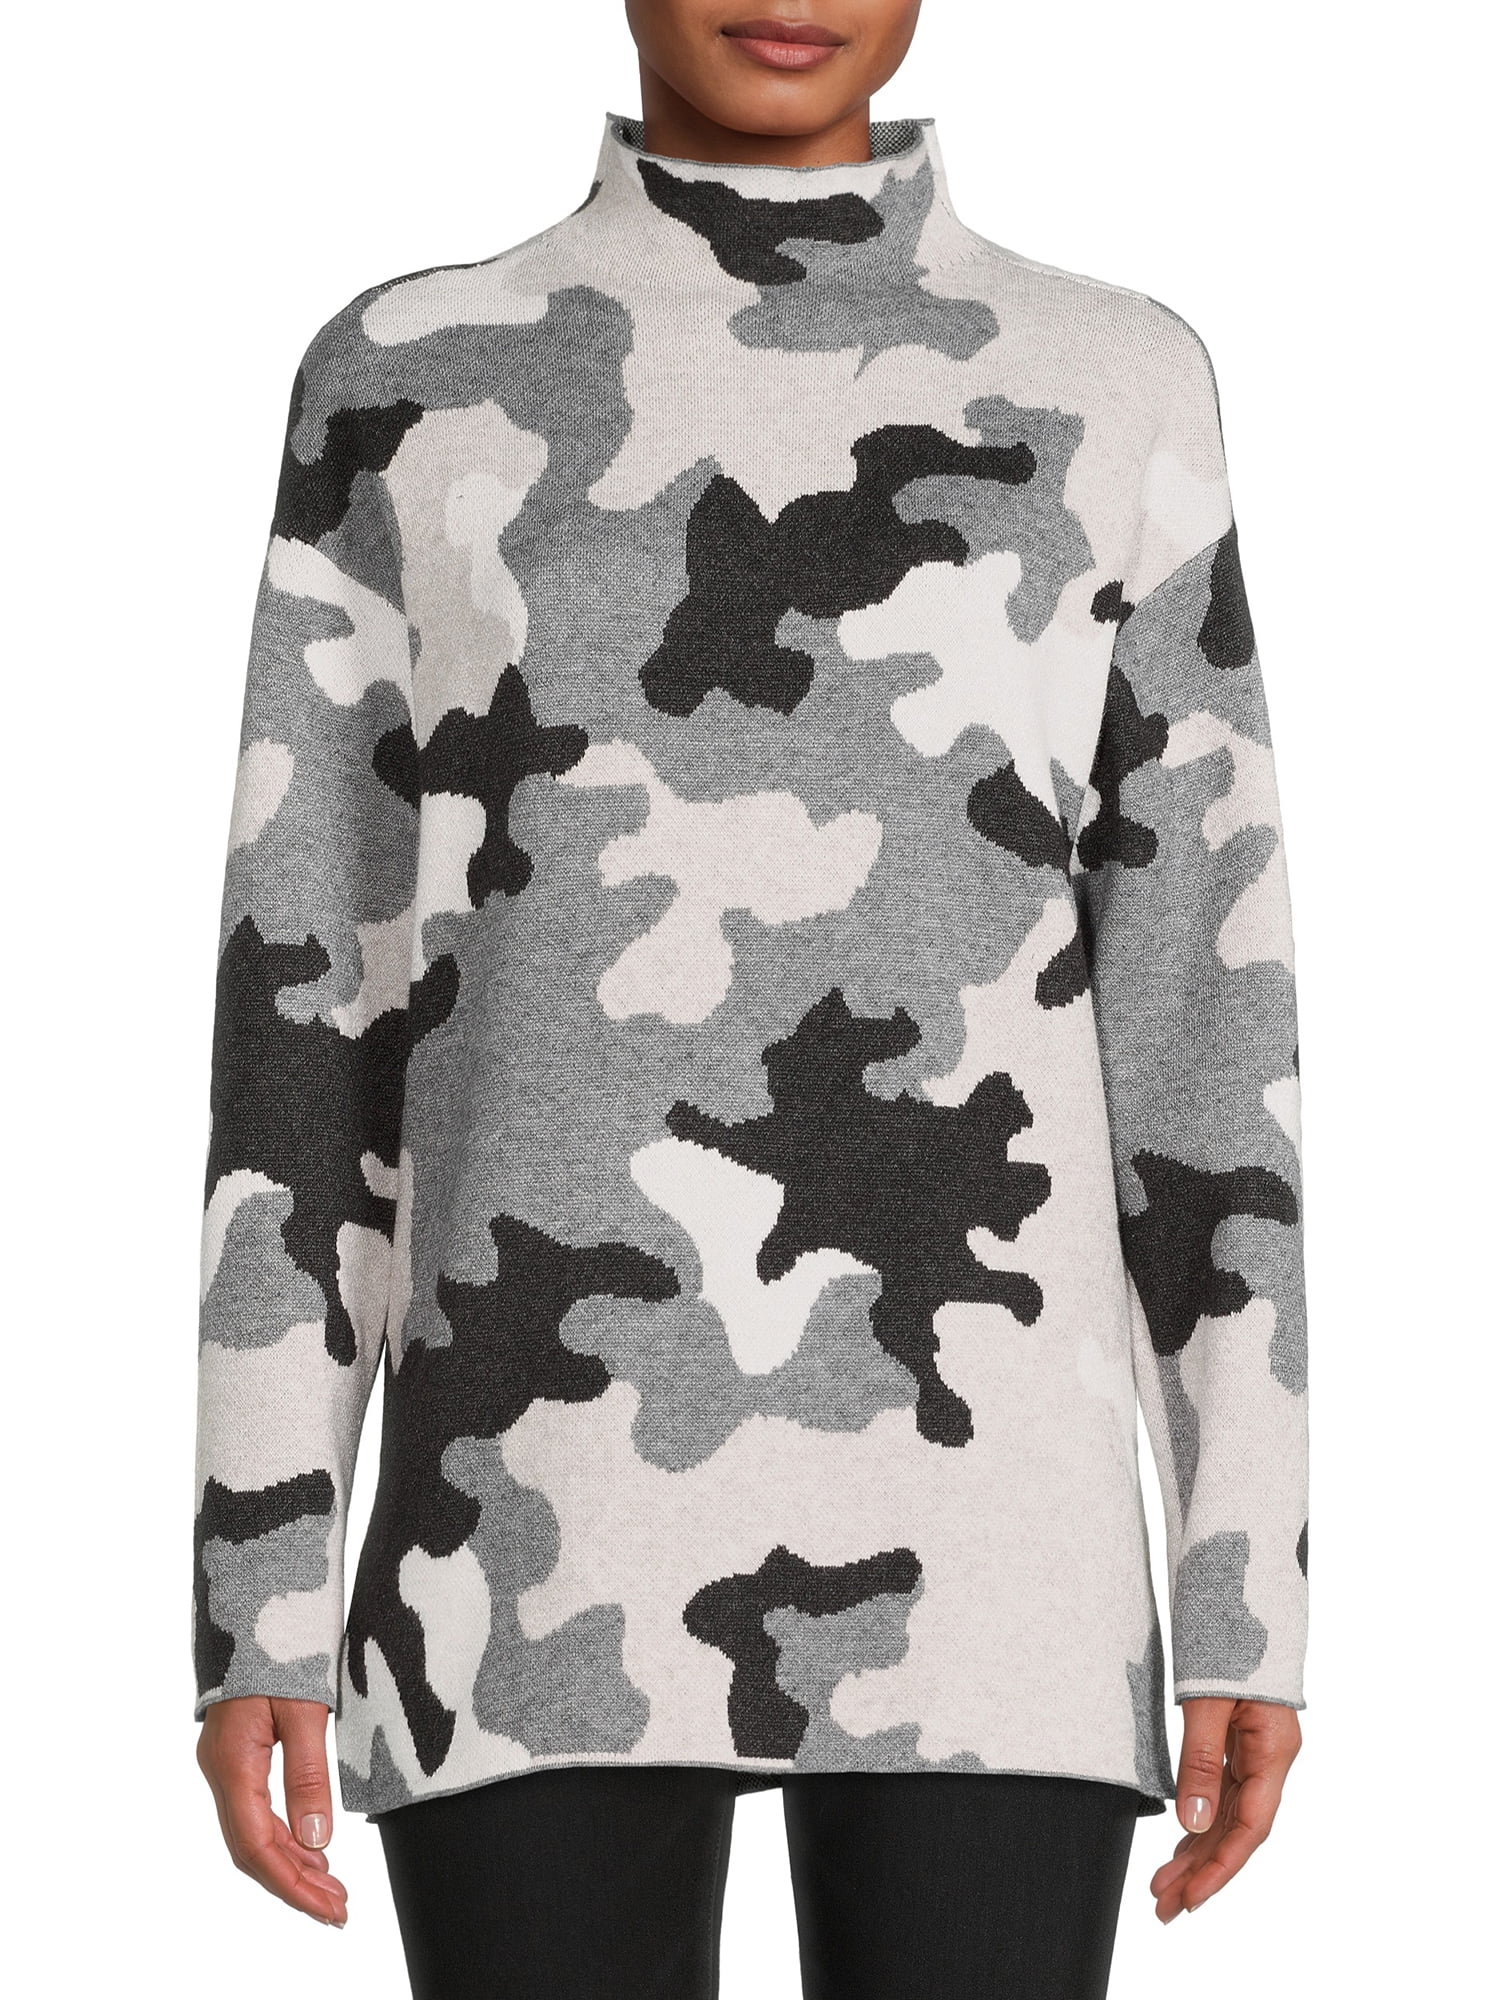 By Design Women's Funnel-Neck Print Sweater - Walmart.com